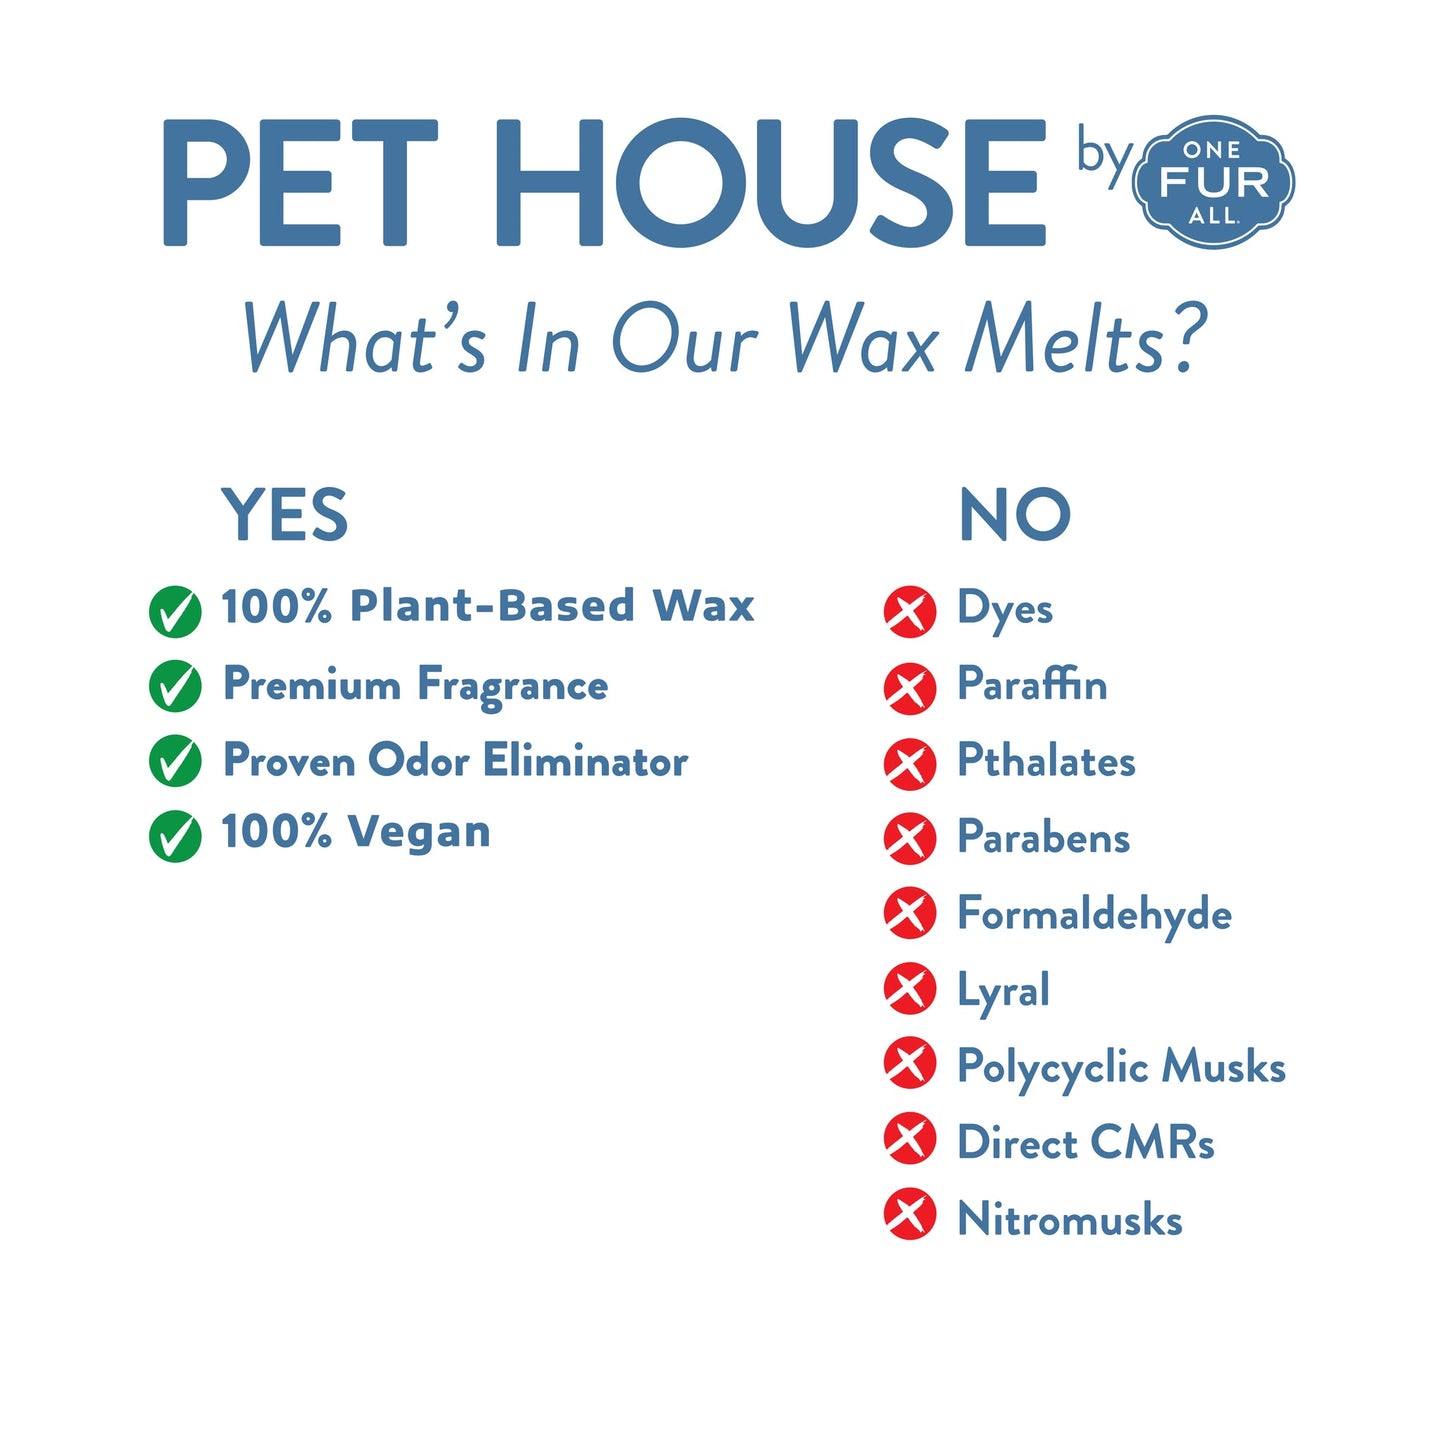 Pet House  - Wax Melts Mango Peach - 3oz